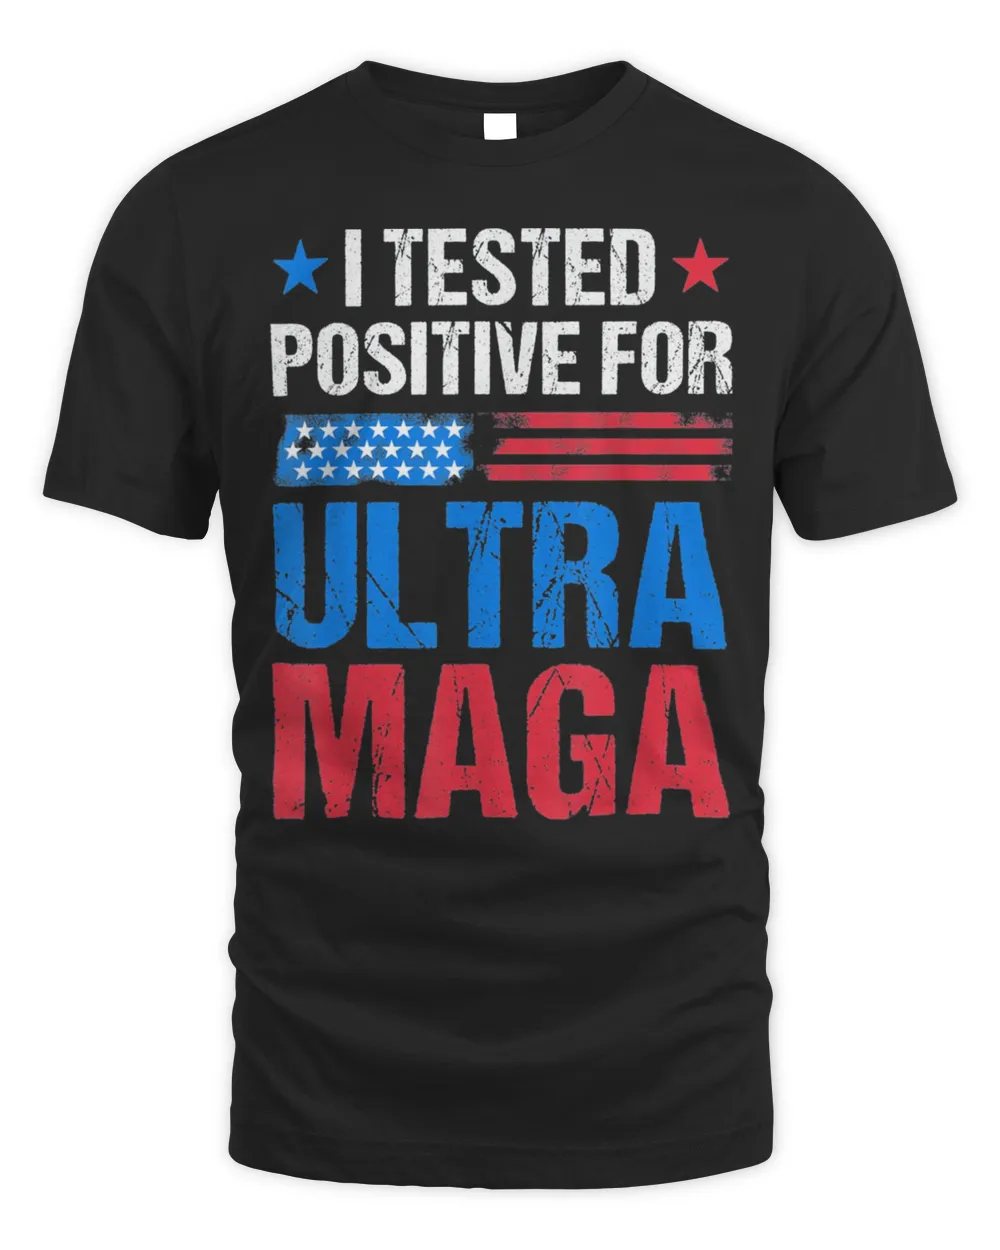 I Tested Positive For Ultra Maga US Flag ProTrump Ultra MAG Shirt